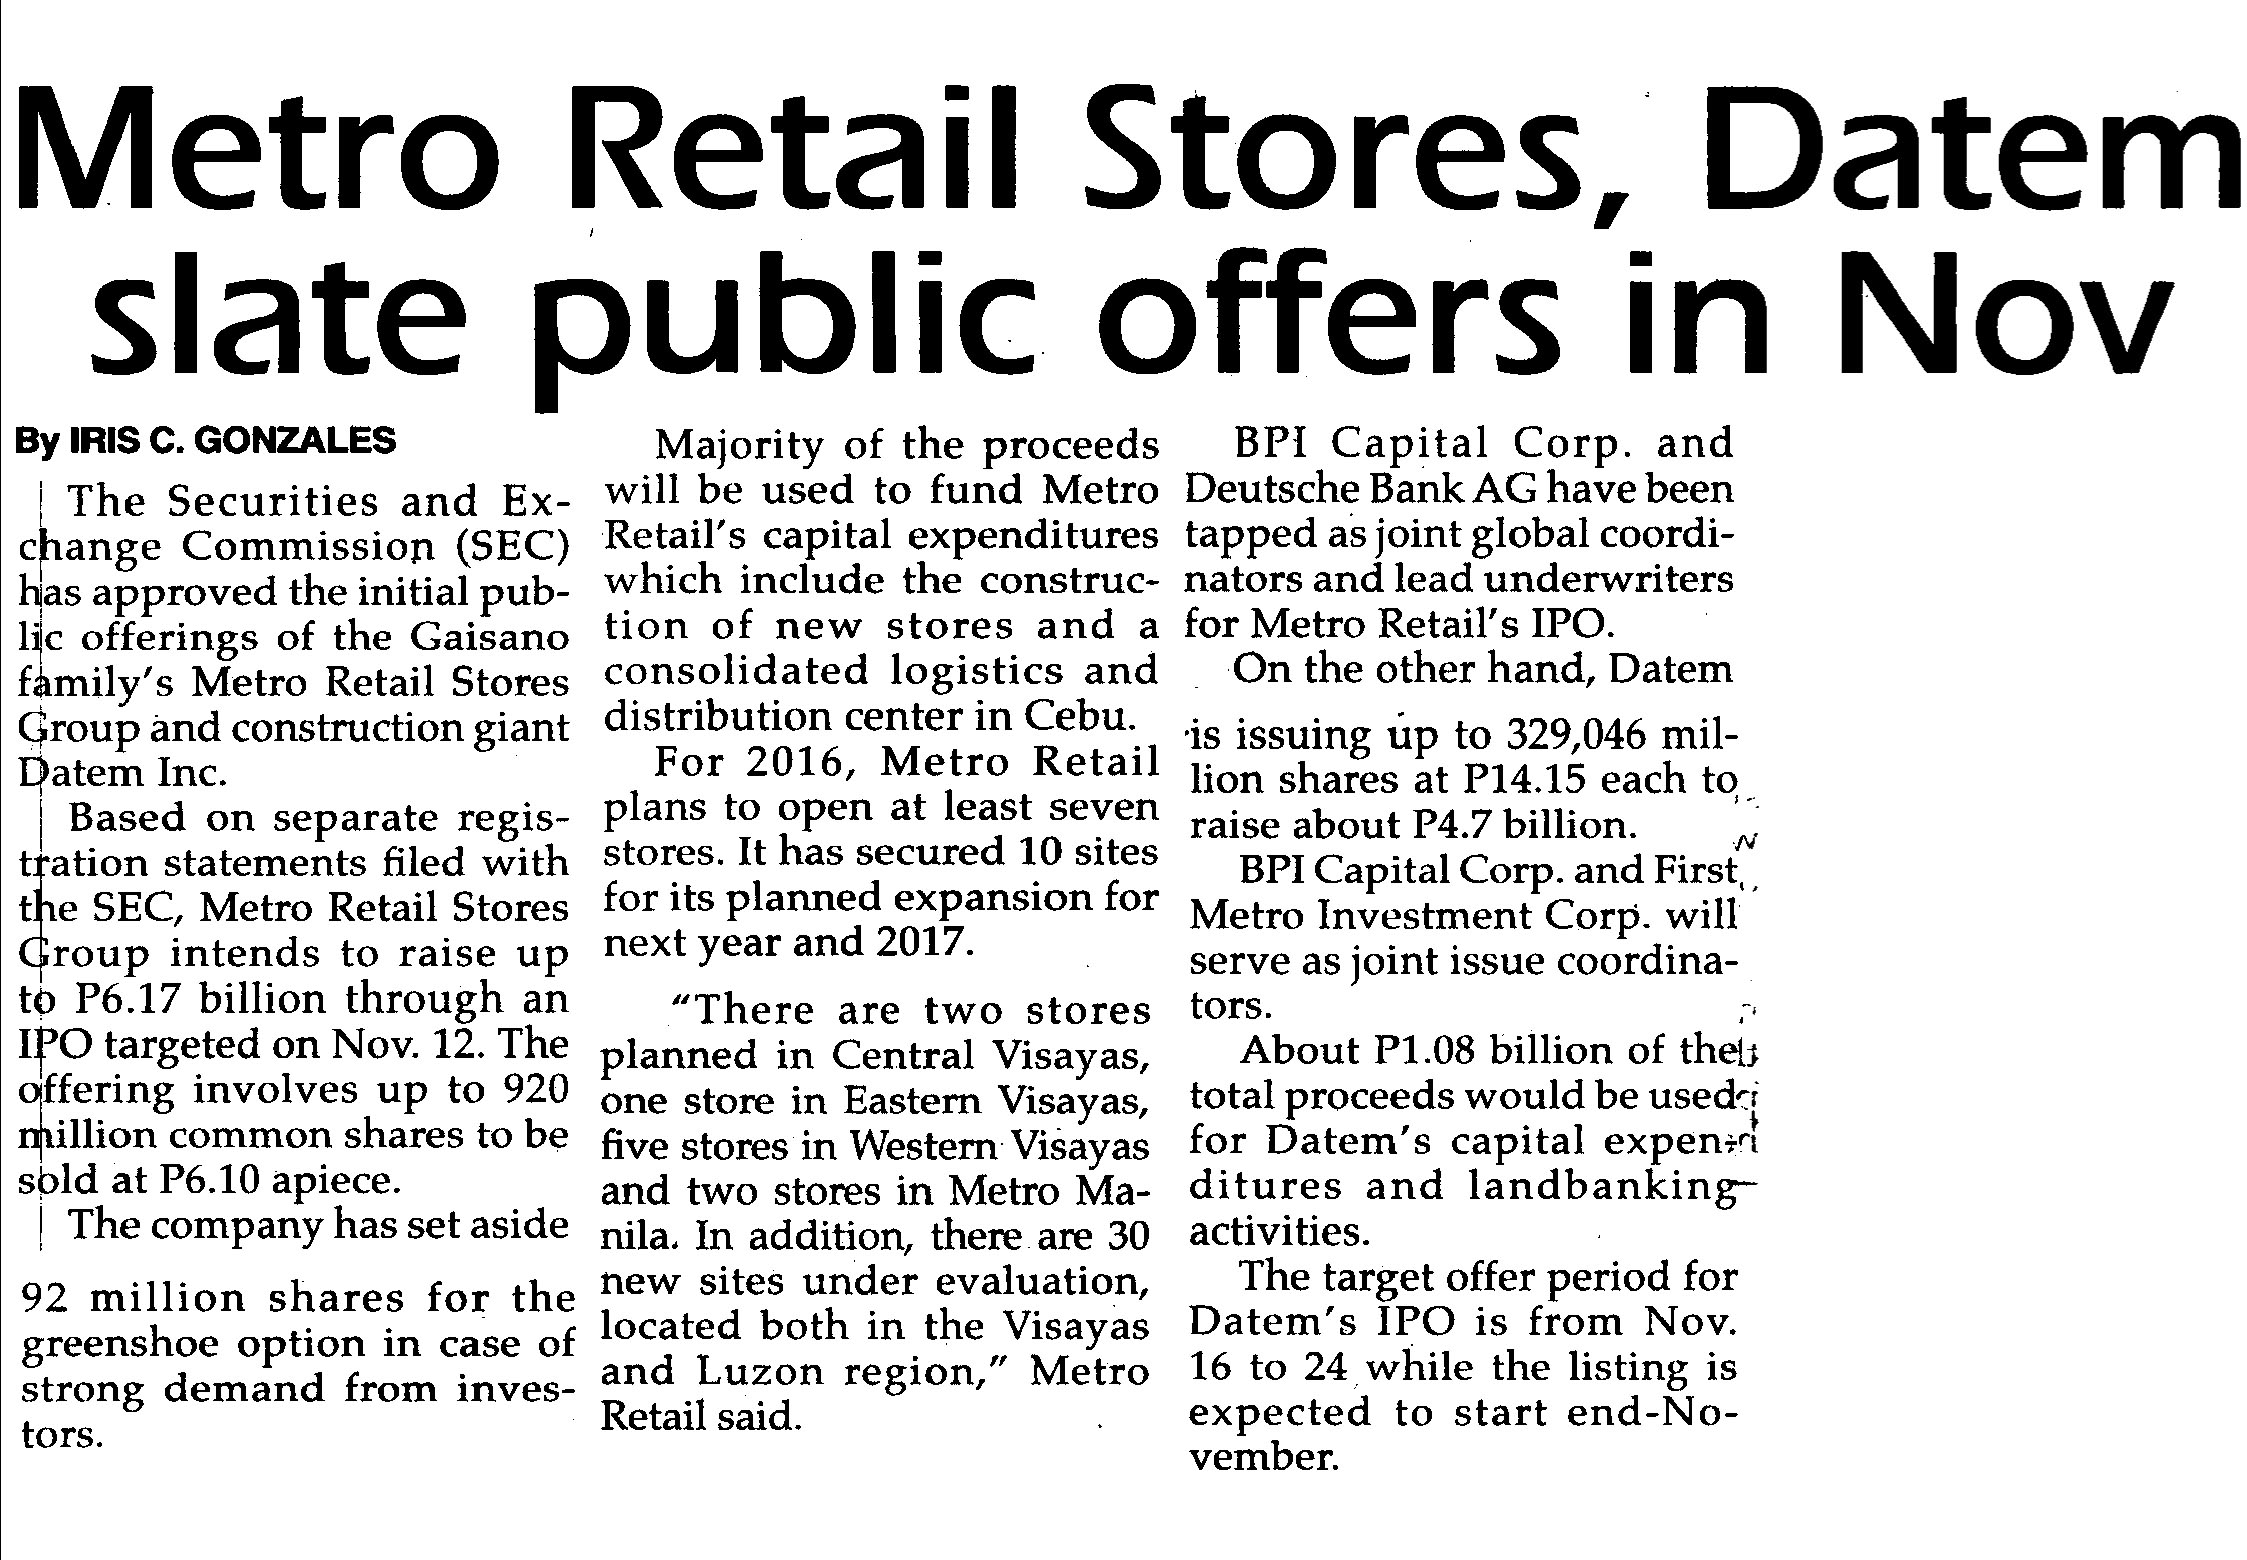 Metro Retail Stores Datem slate public offers in Nov The Philippine Star